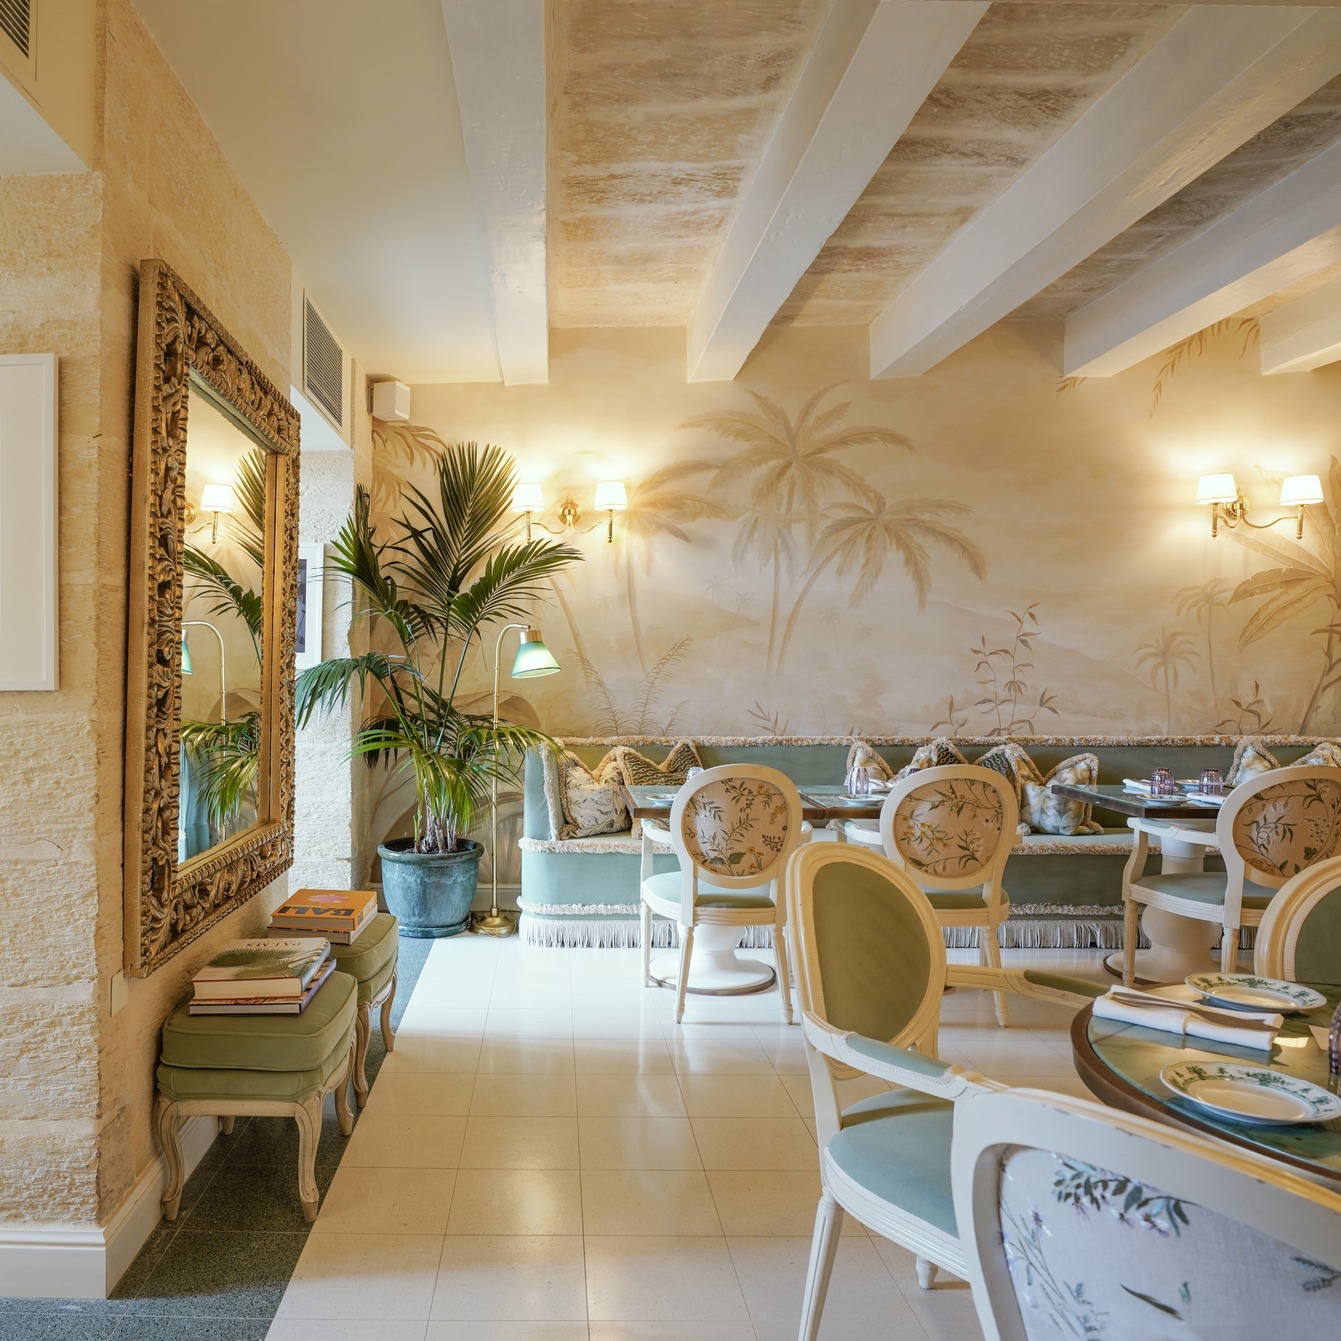 Botanical paradise dining decor at Luna Restaurant - Al Fresco Dining Spots in Malta 